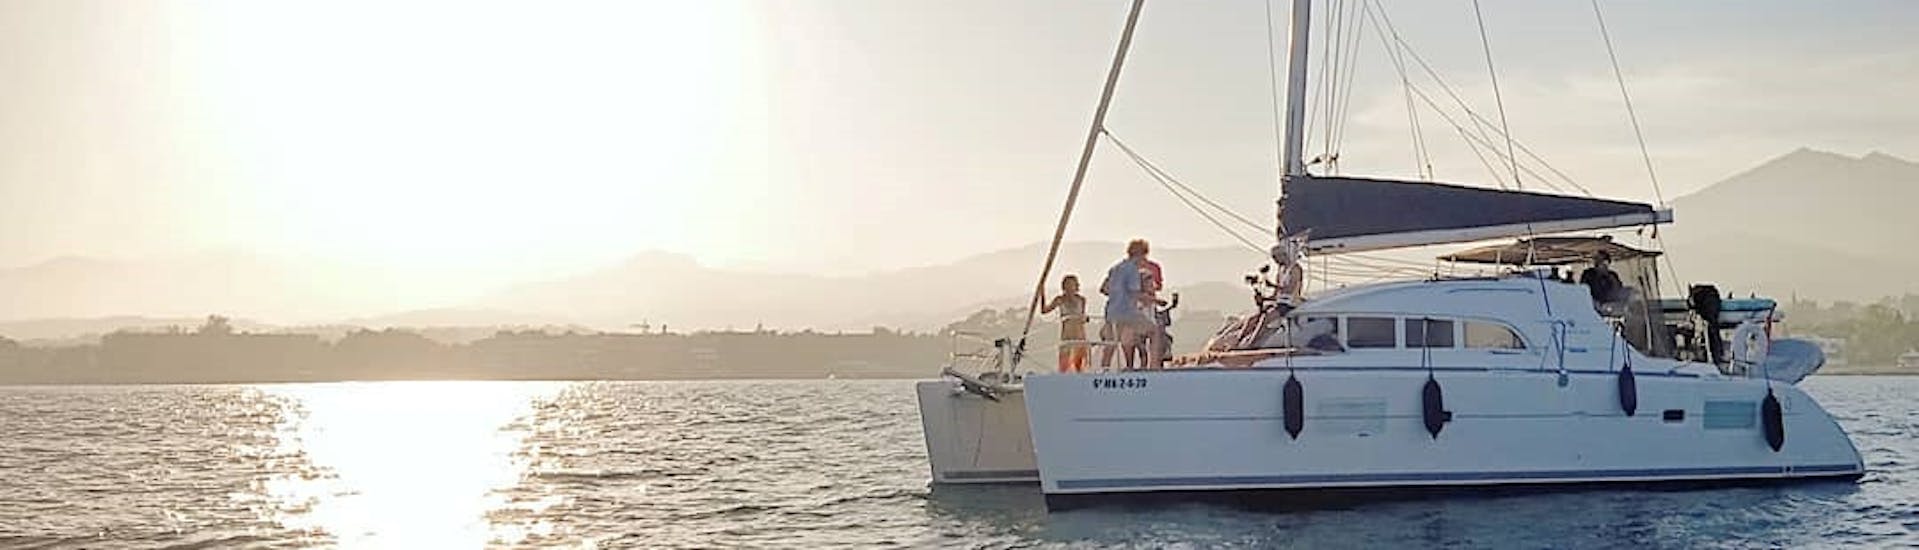 People enjoying aboard Catamaran Trip along Costa del Sol from Marbella with Royal Catamaran.